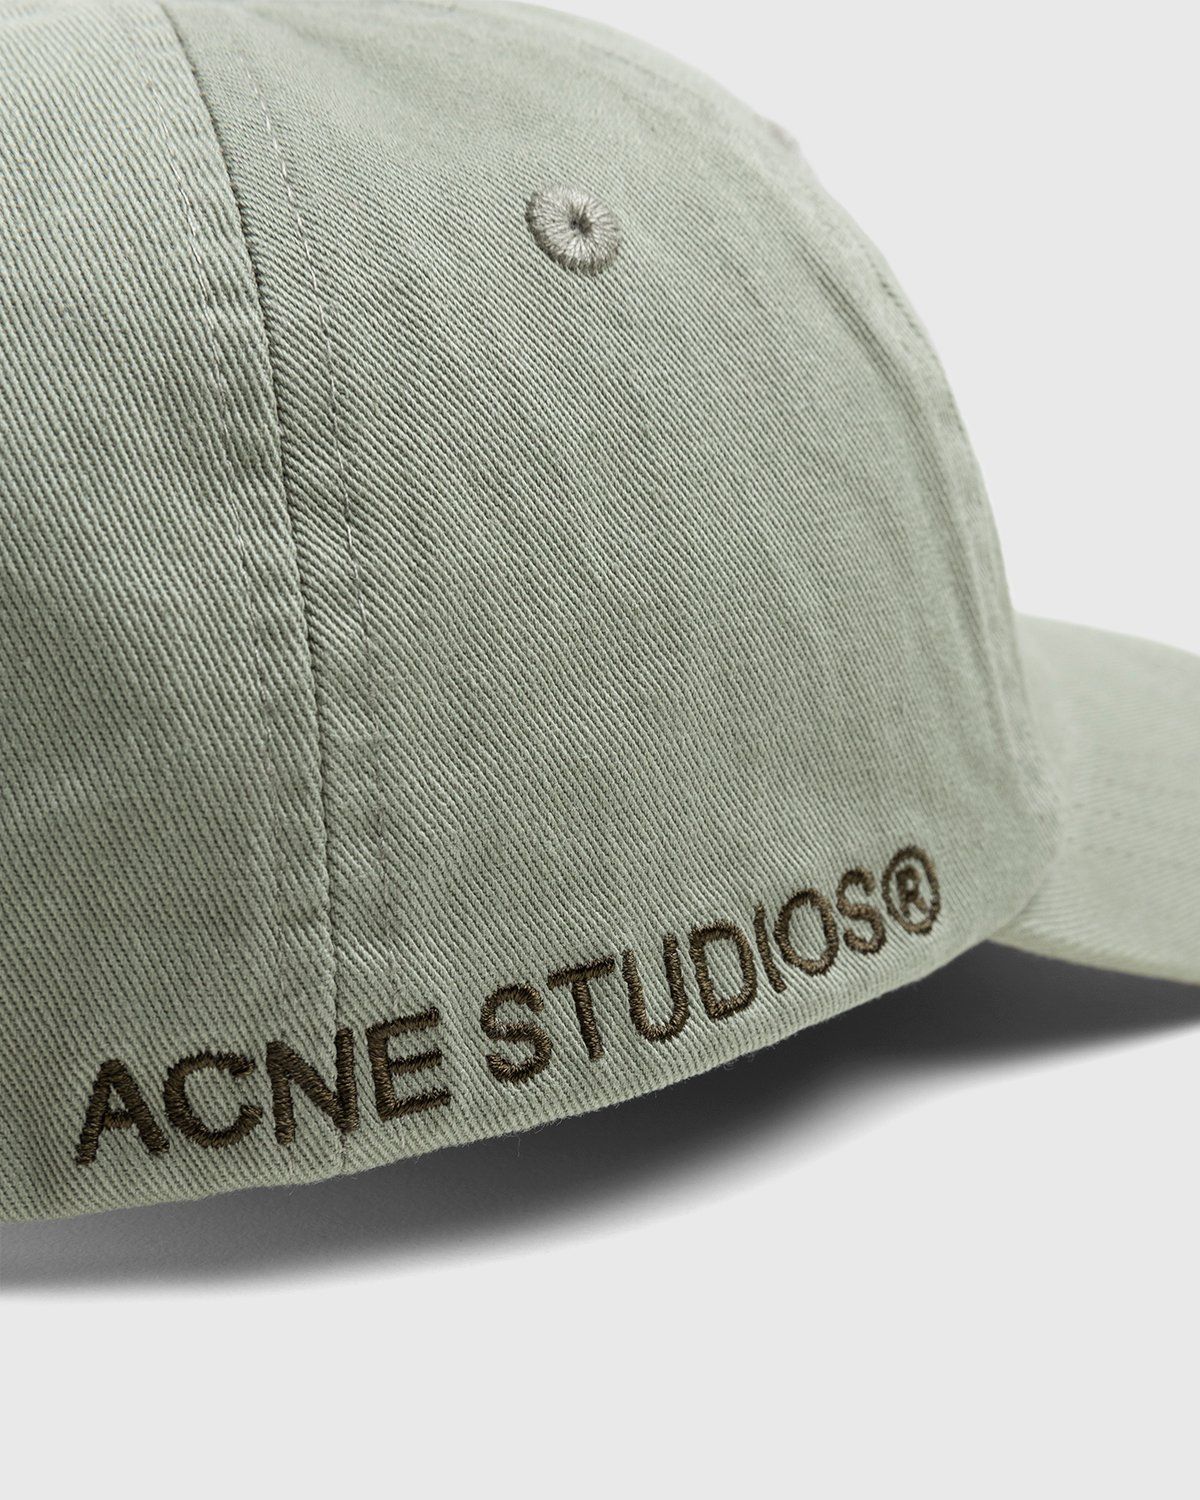 Acne Studios – Cotton Baseball Cap Sage Green - Hats - Green - Image 5